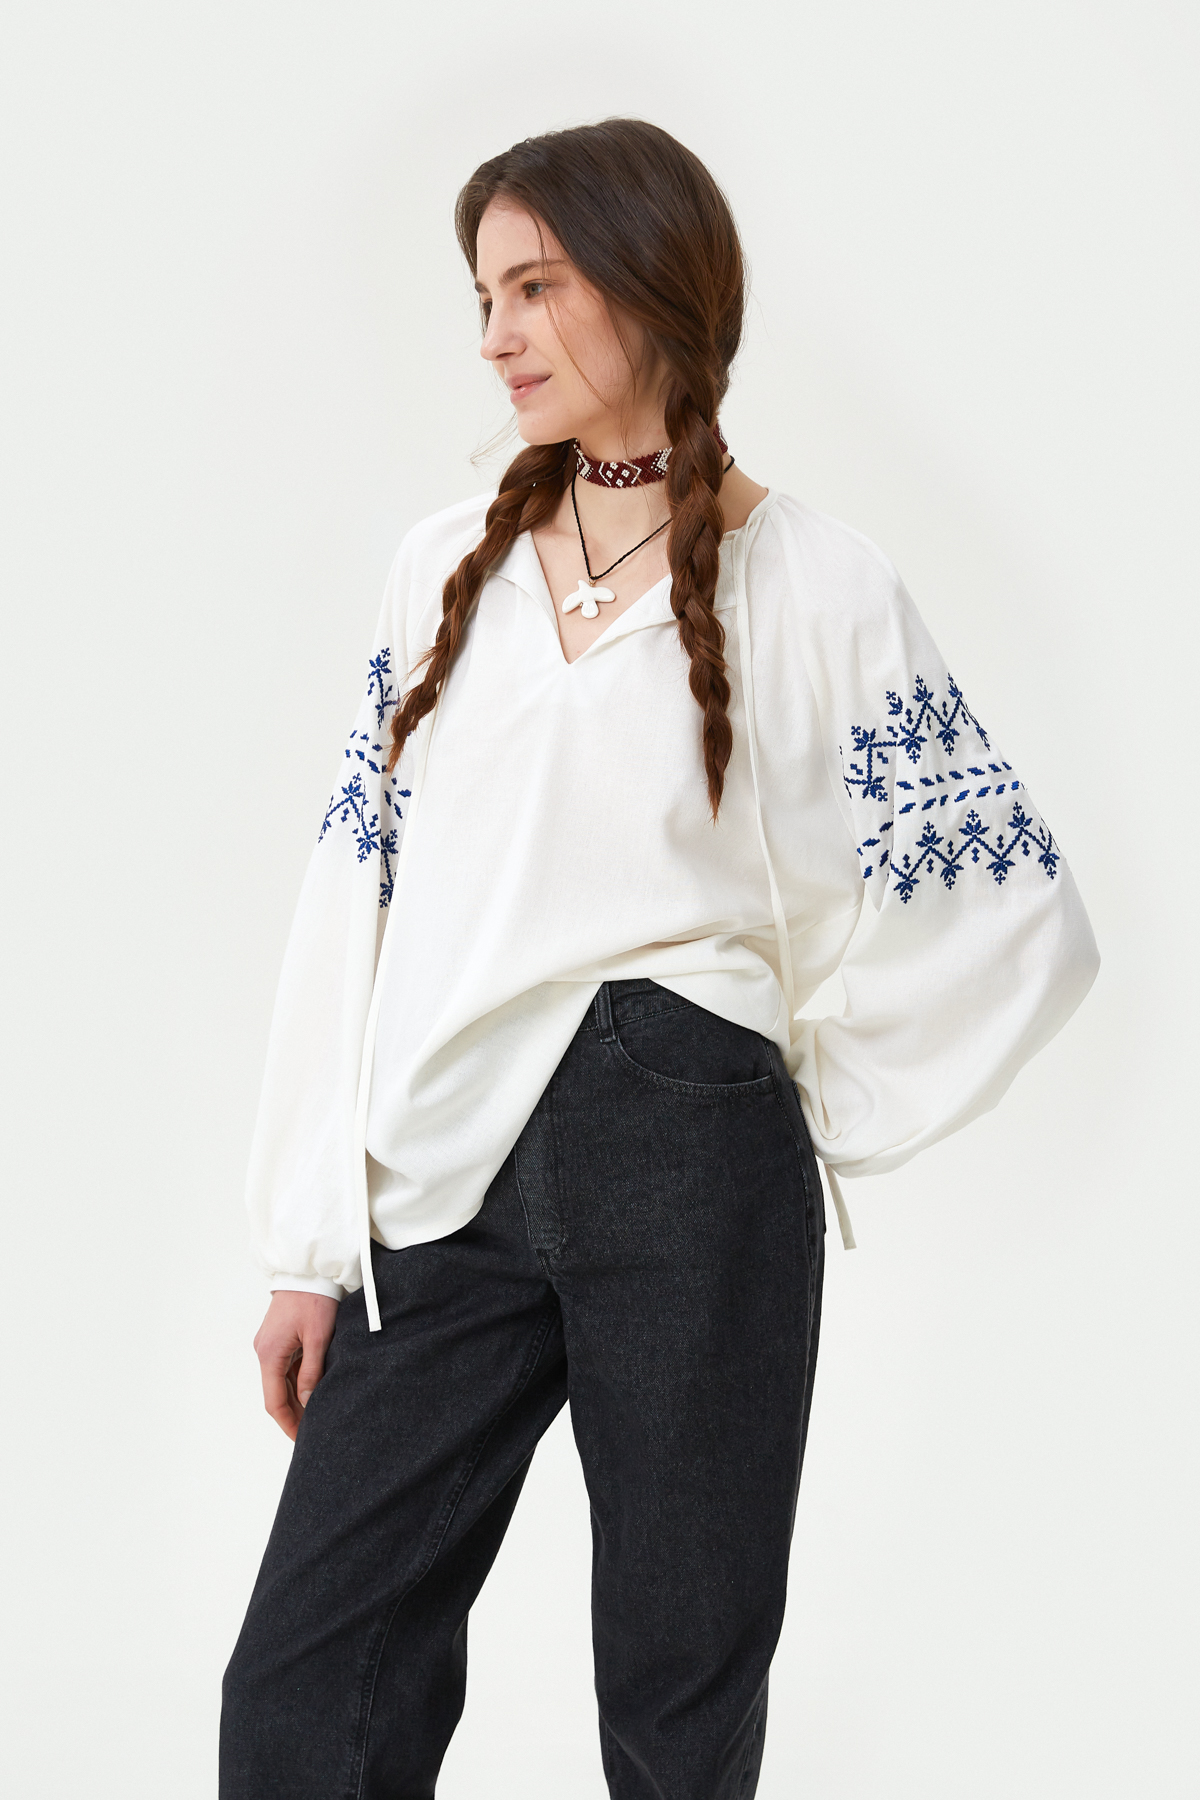 Milky linen vyshyvanka shirt with zigzags embroidery, photo 3